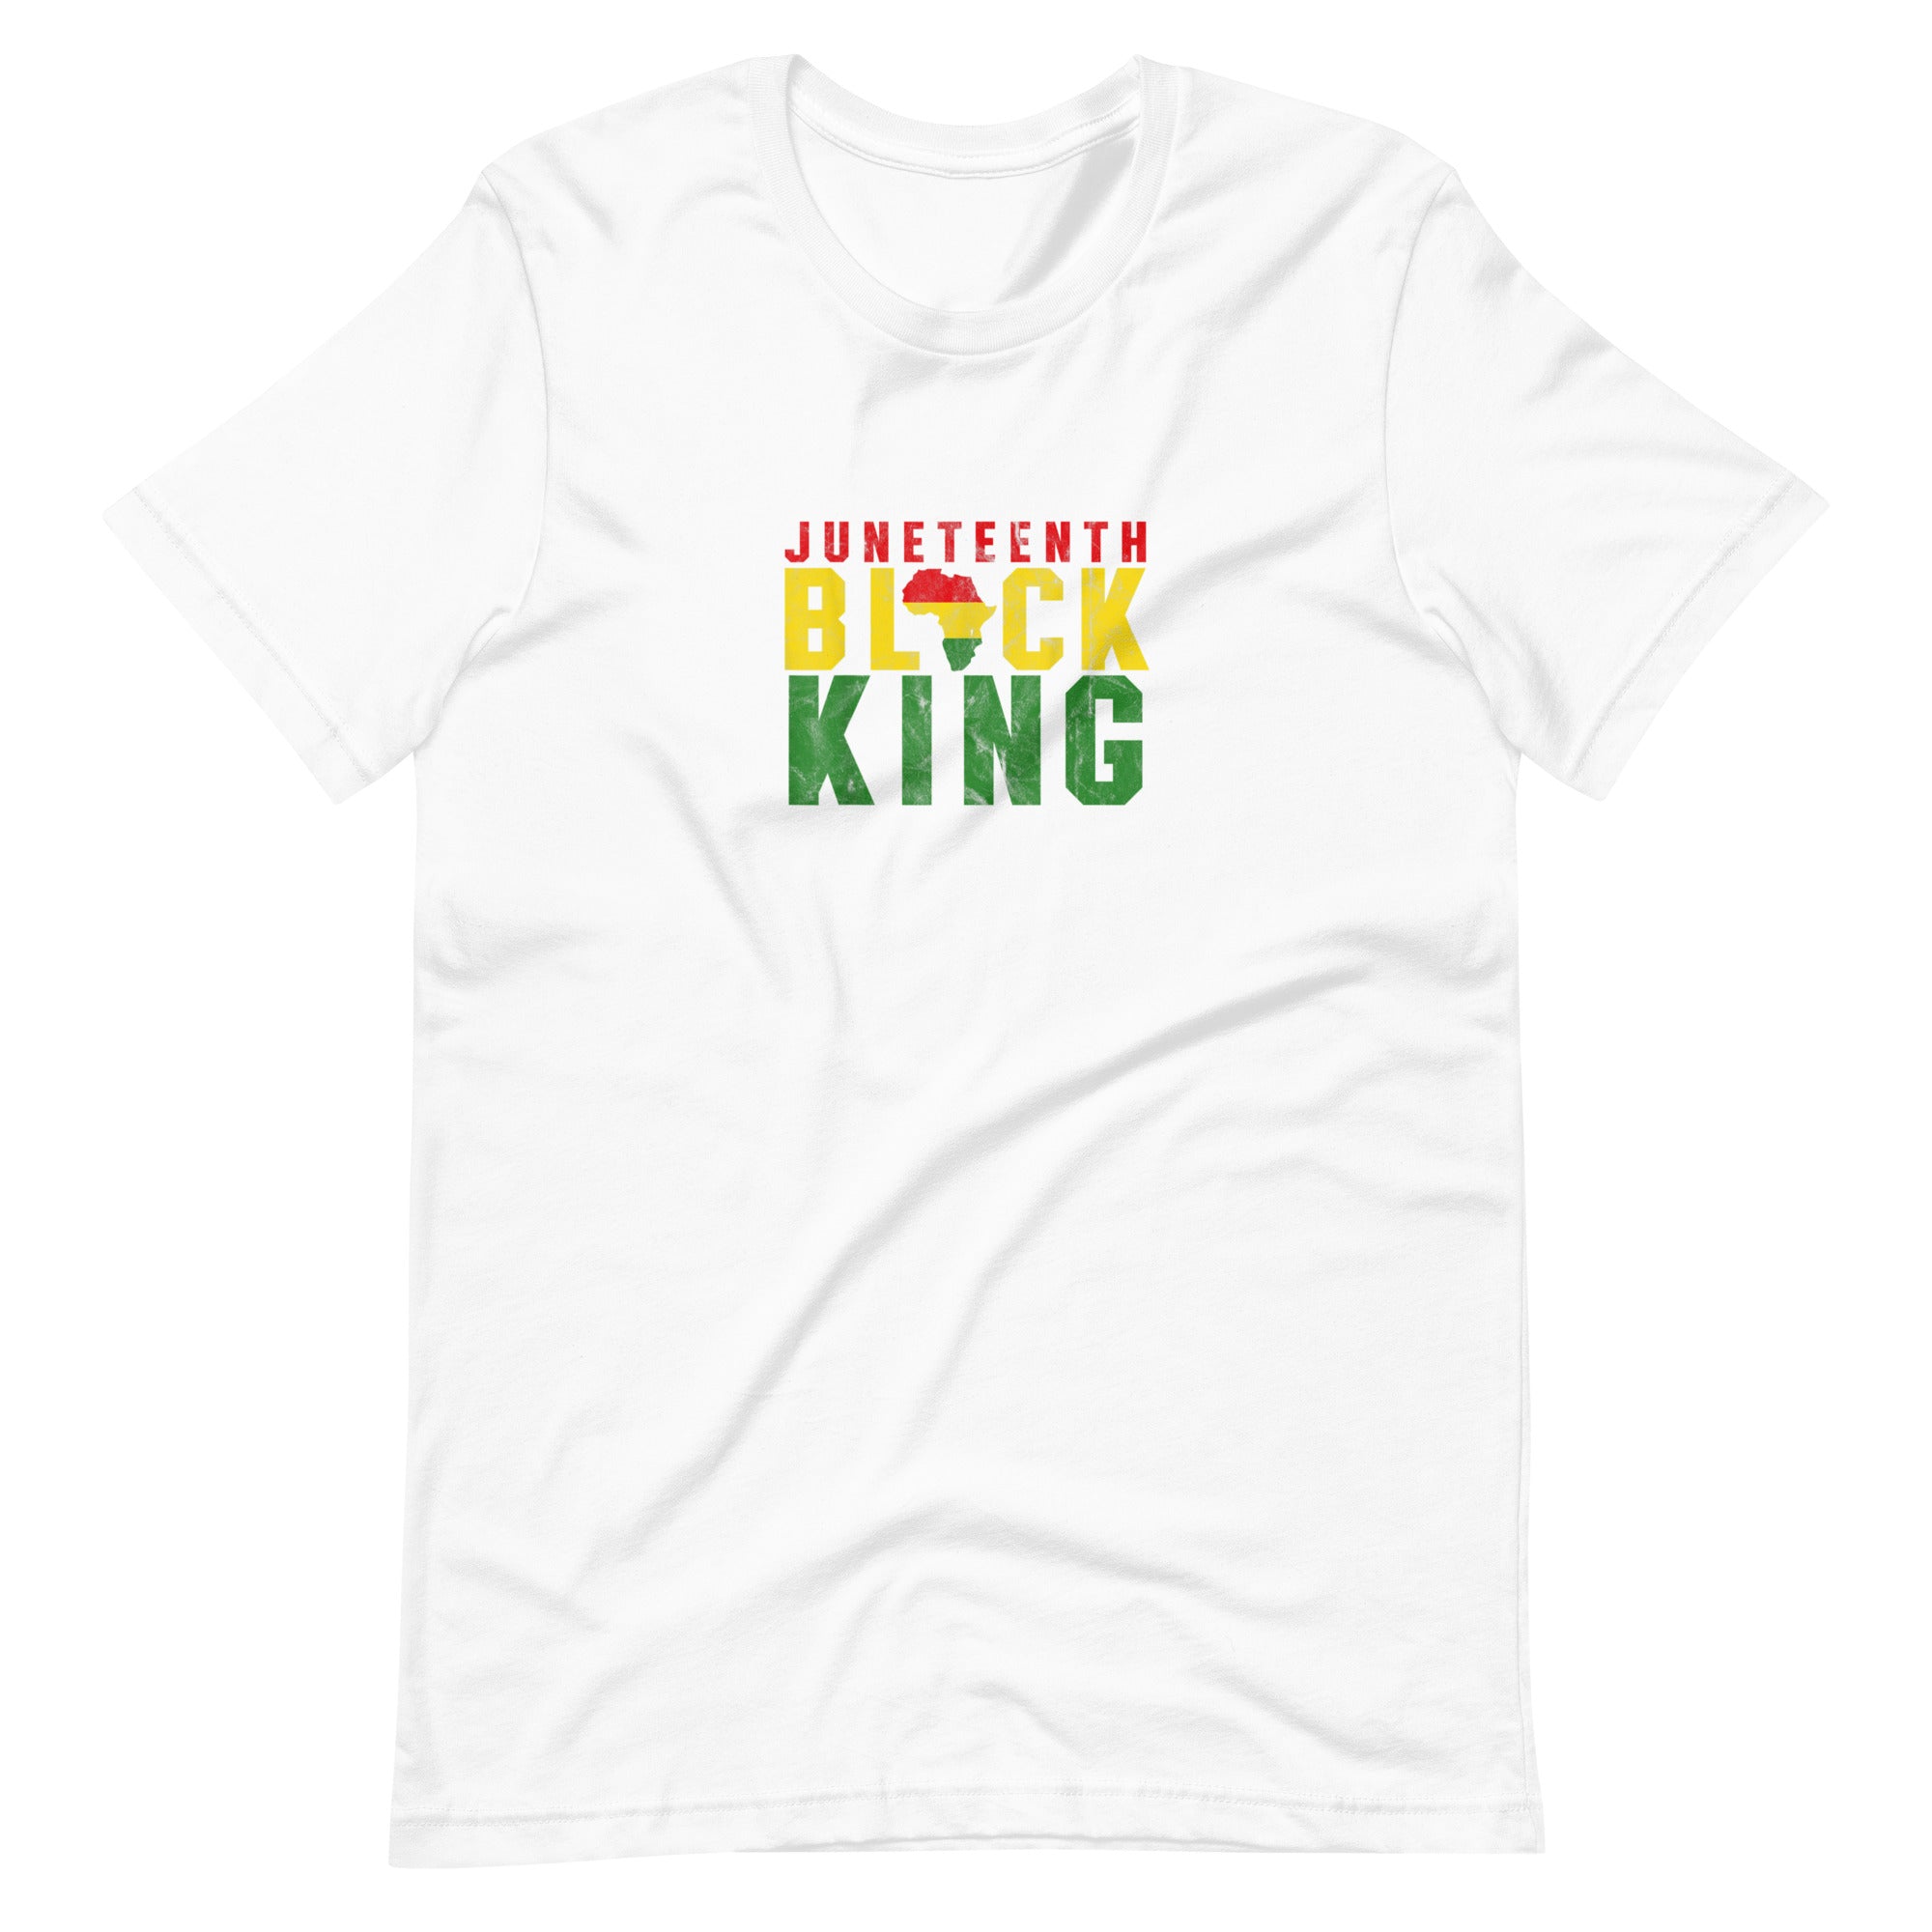 "Black King" Unisex t-shirt